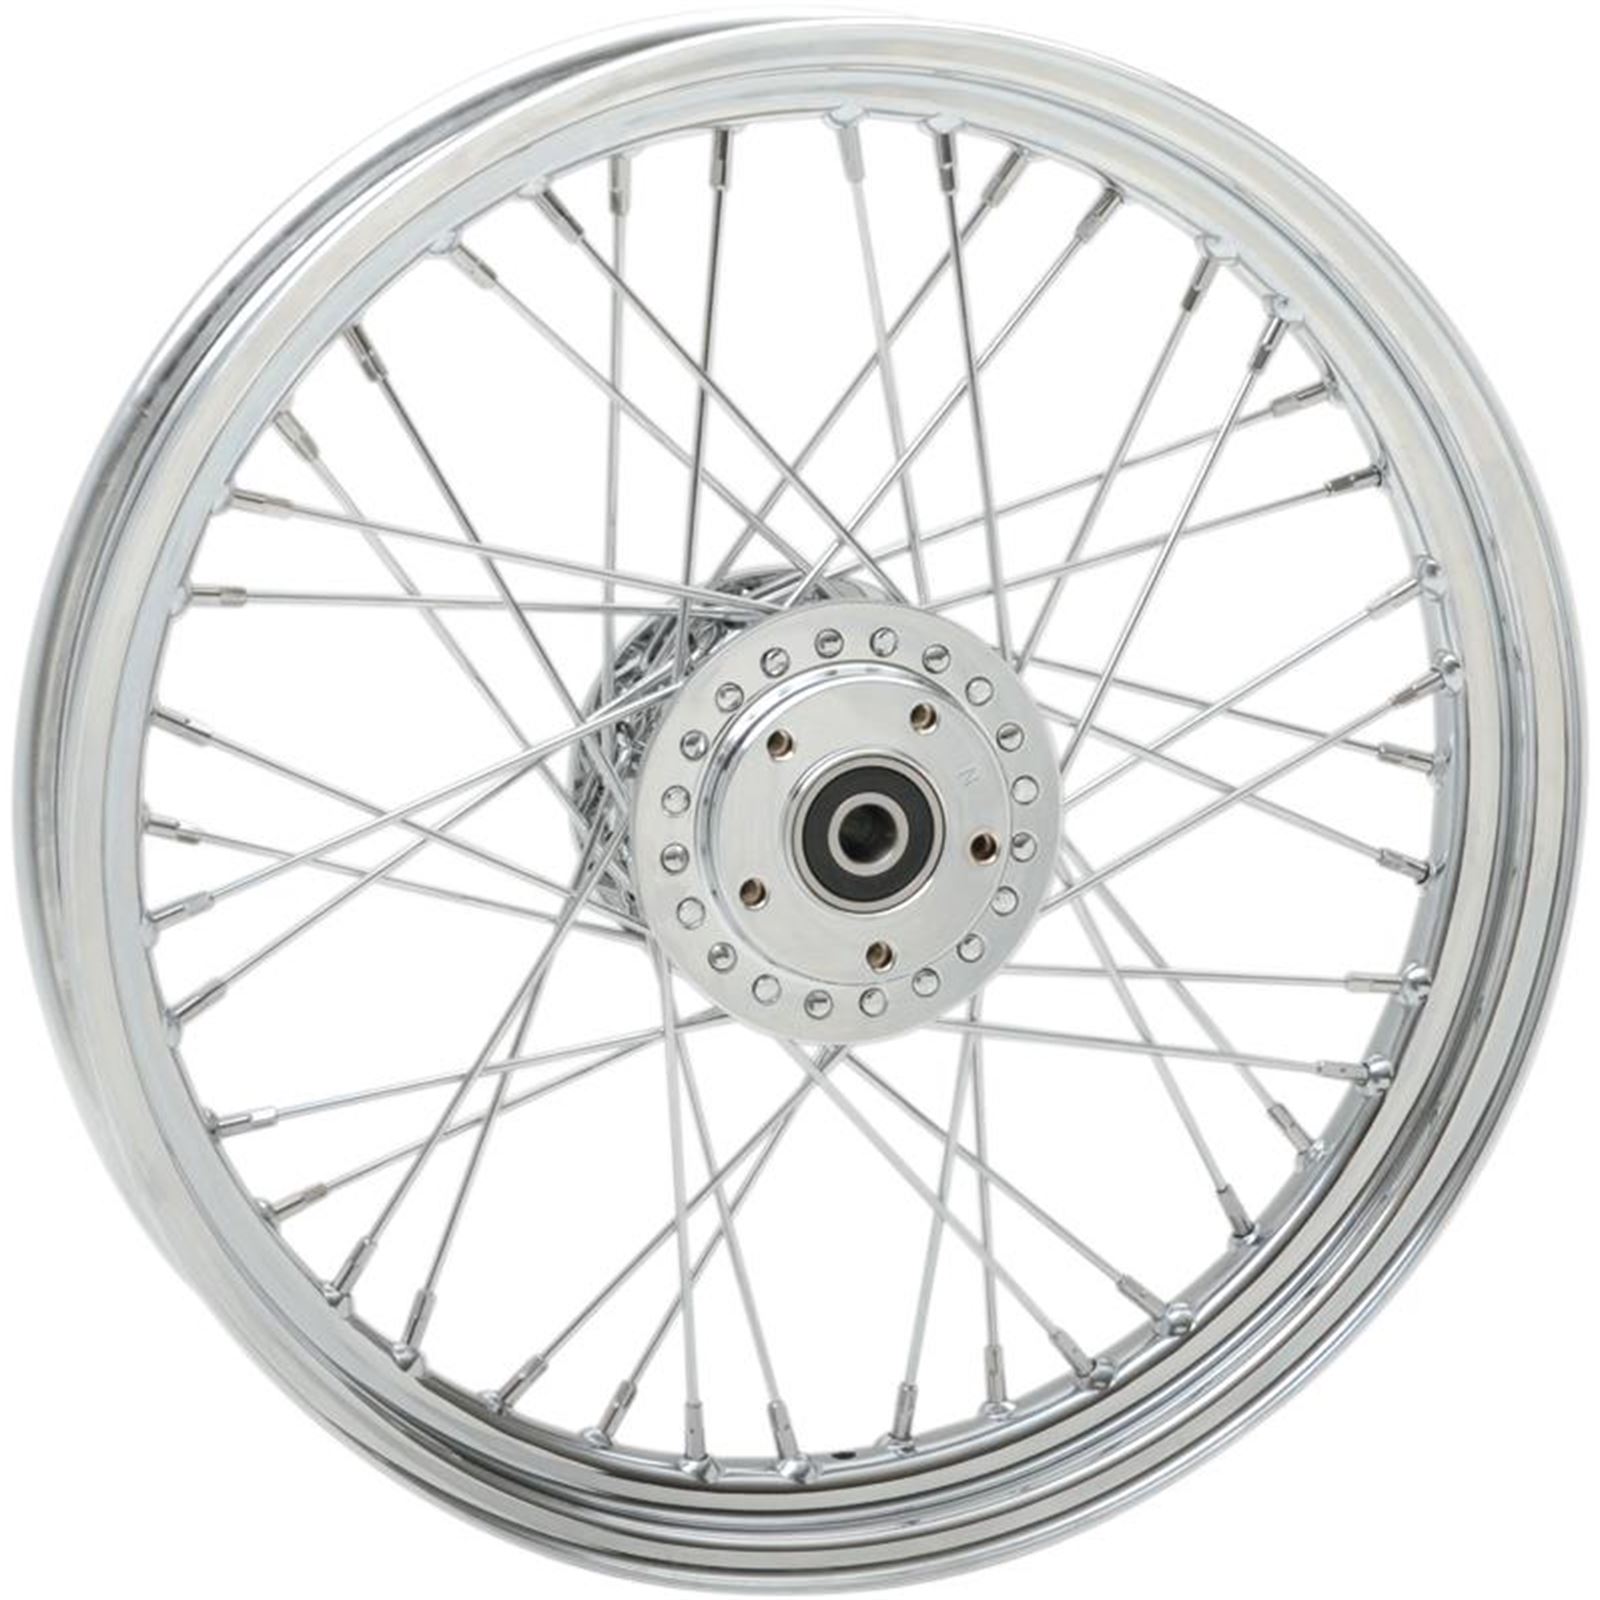 Drag Specialties Front Wheel Chrome 19x2.5 00-03 FXD